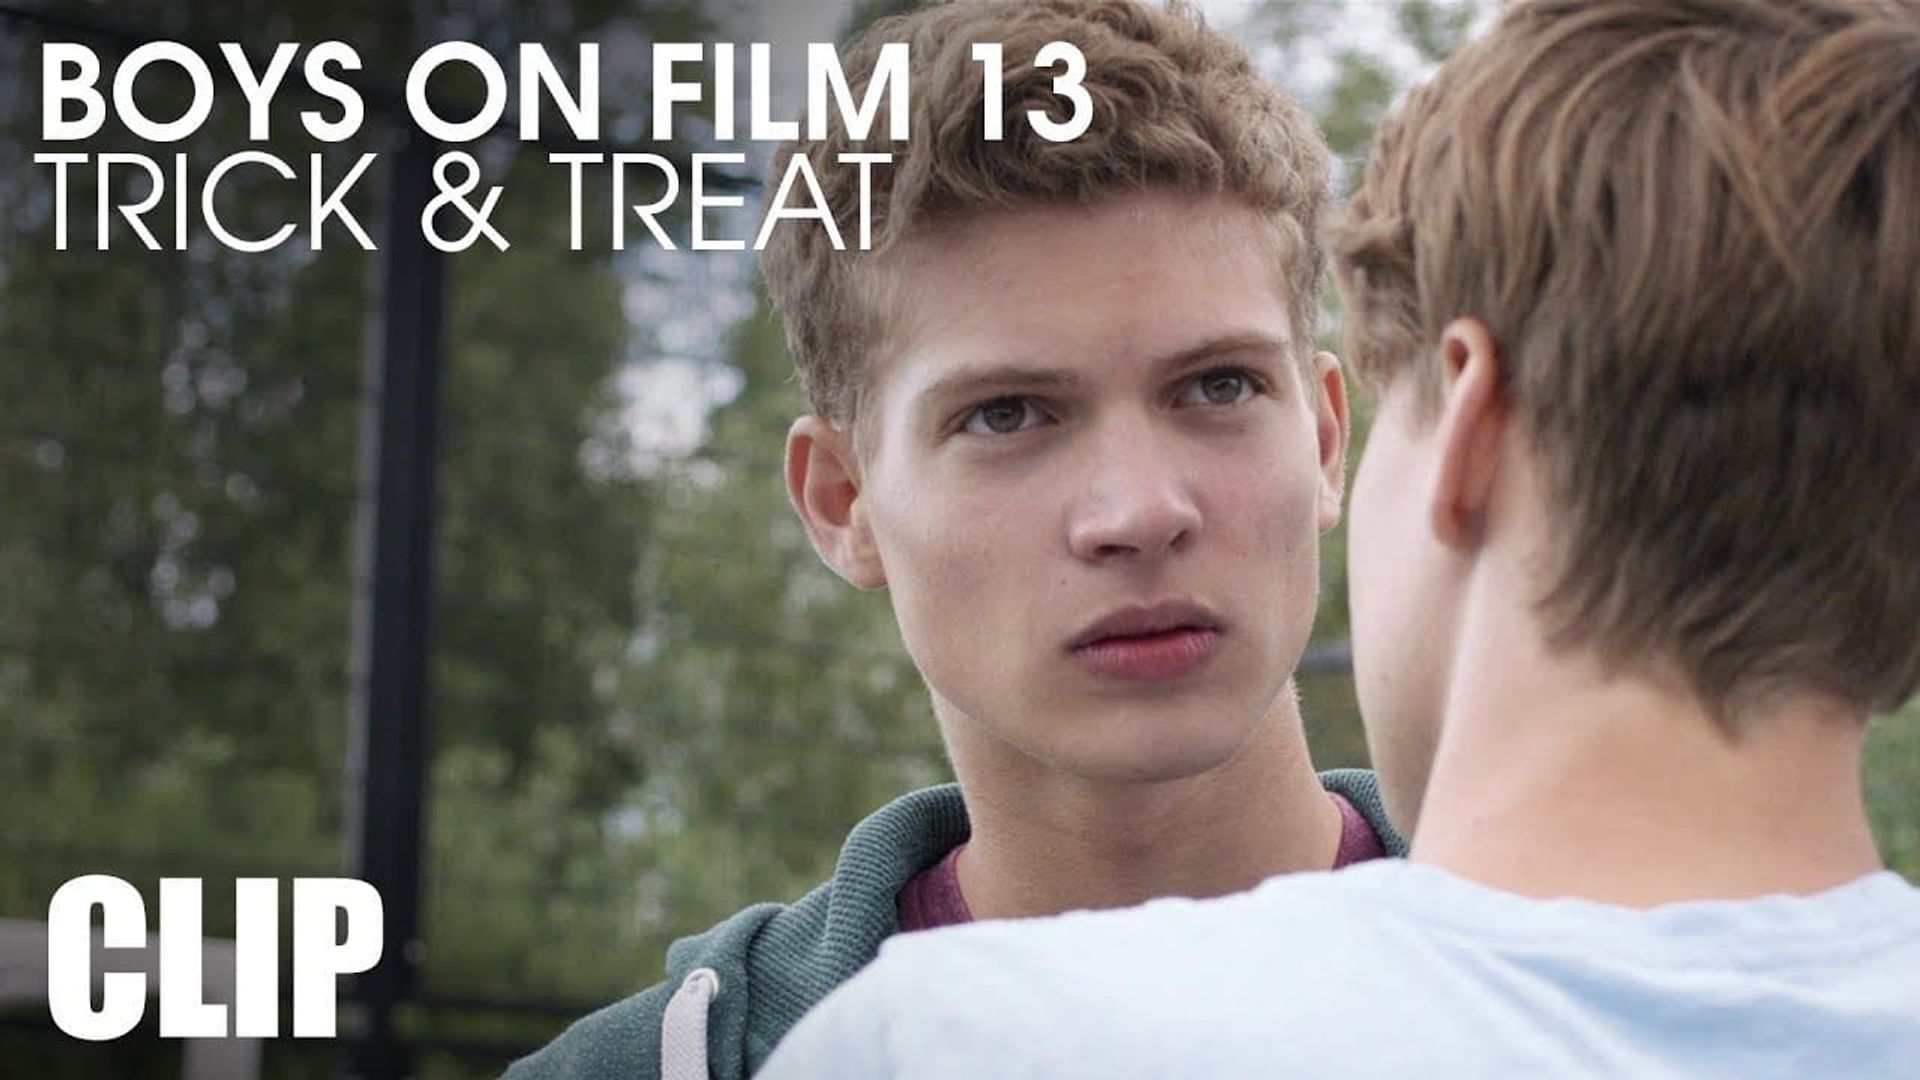 Boys on Film 13: Trick & Treat background